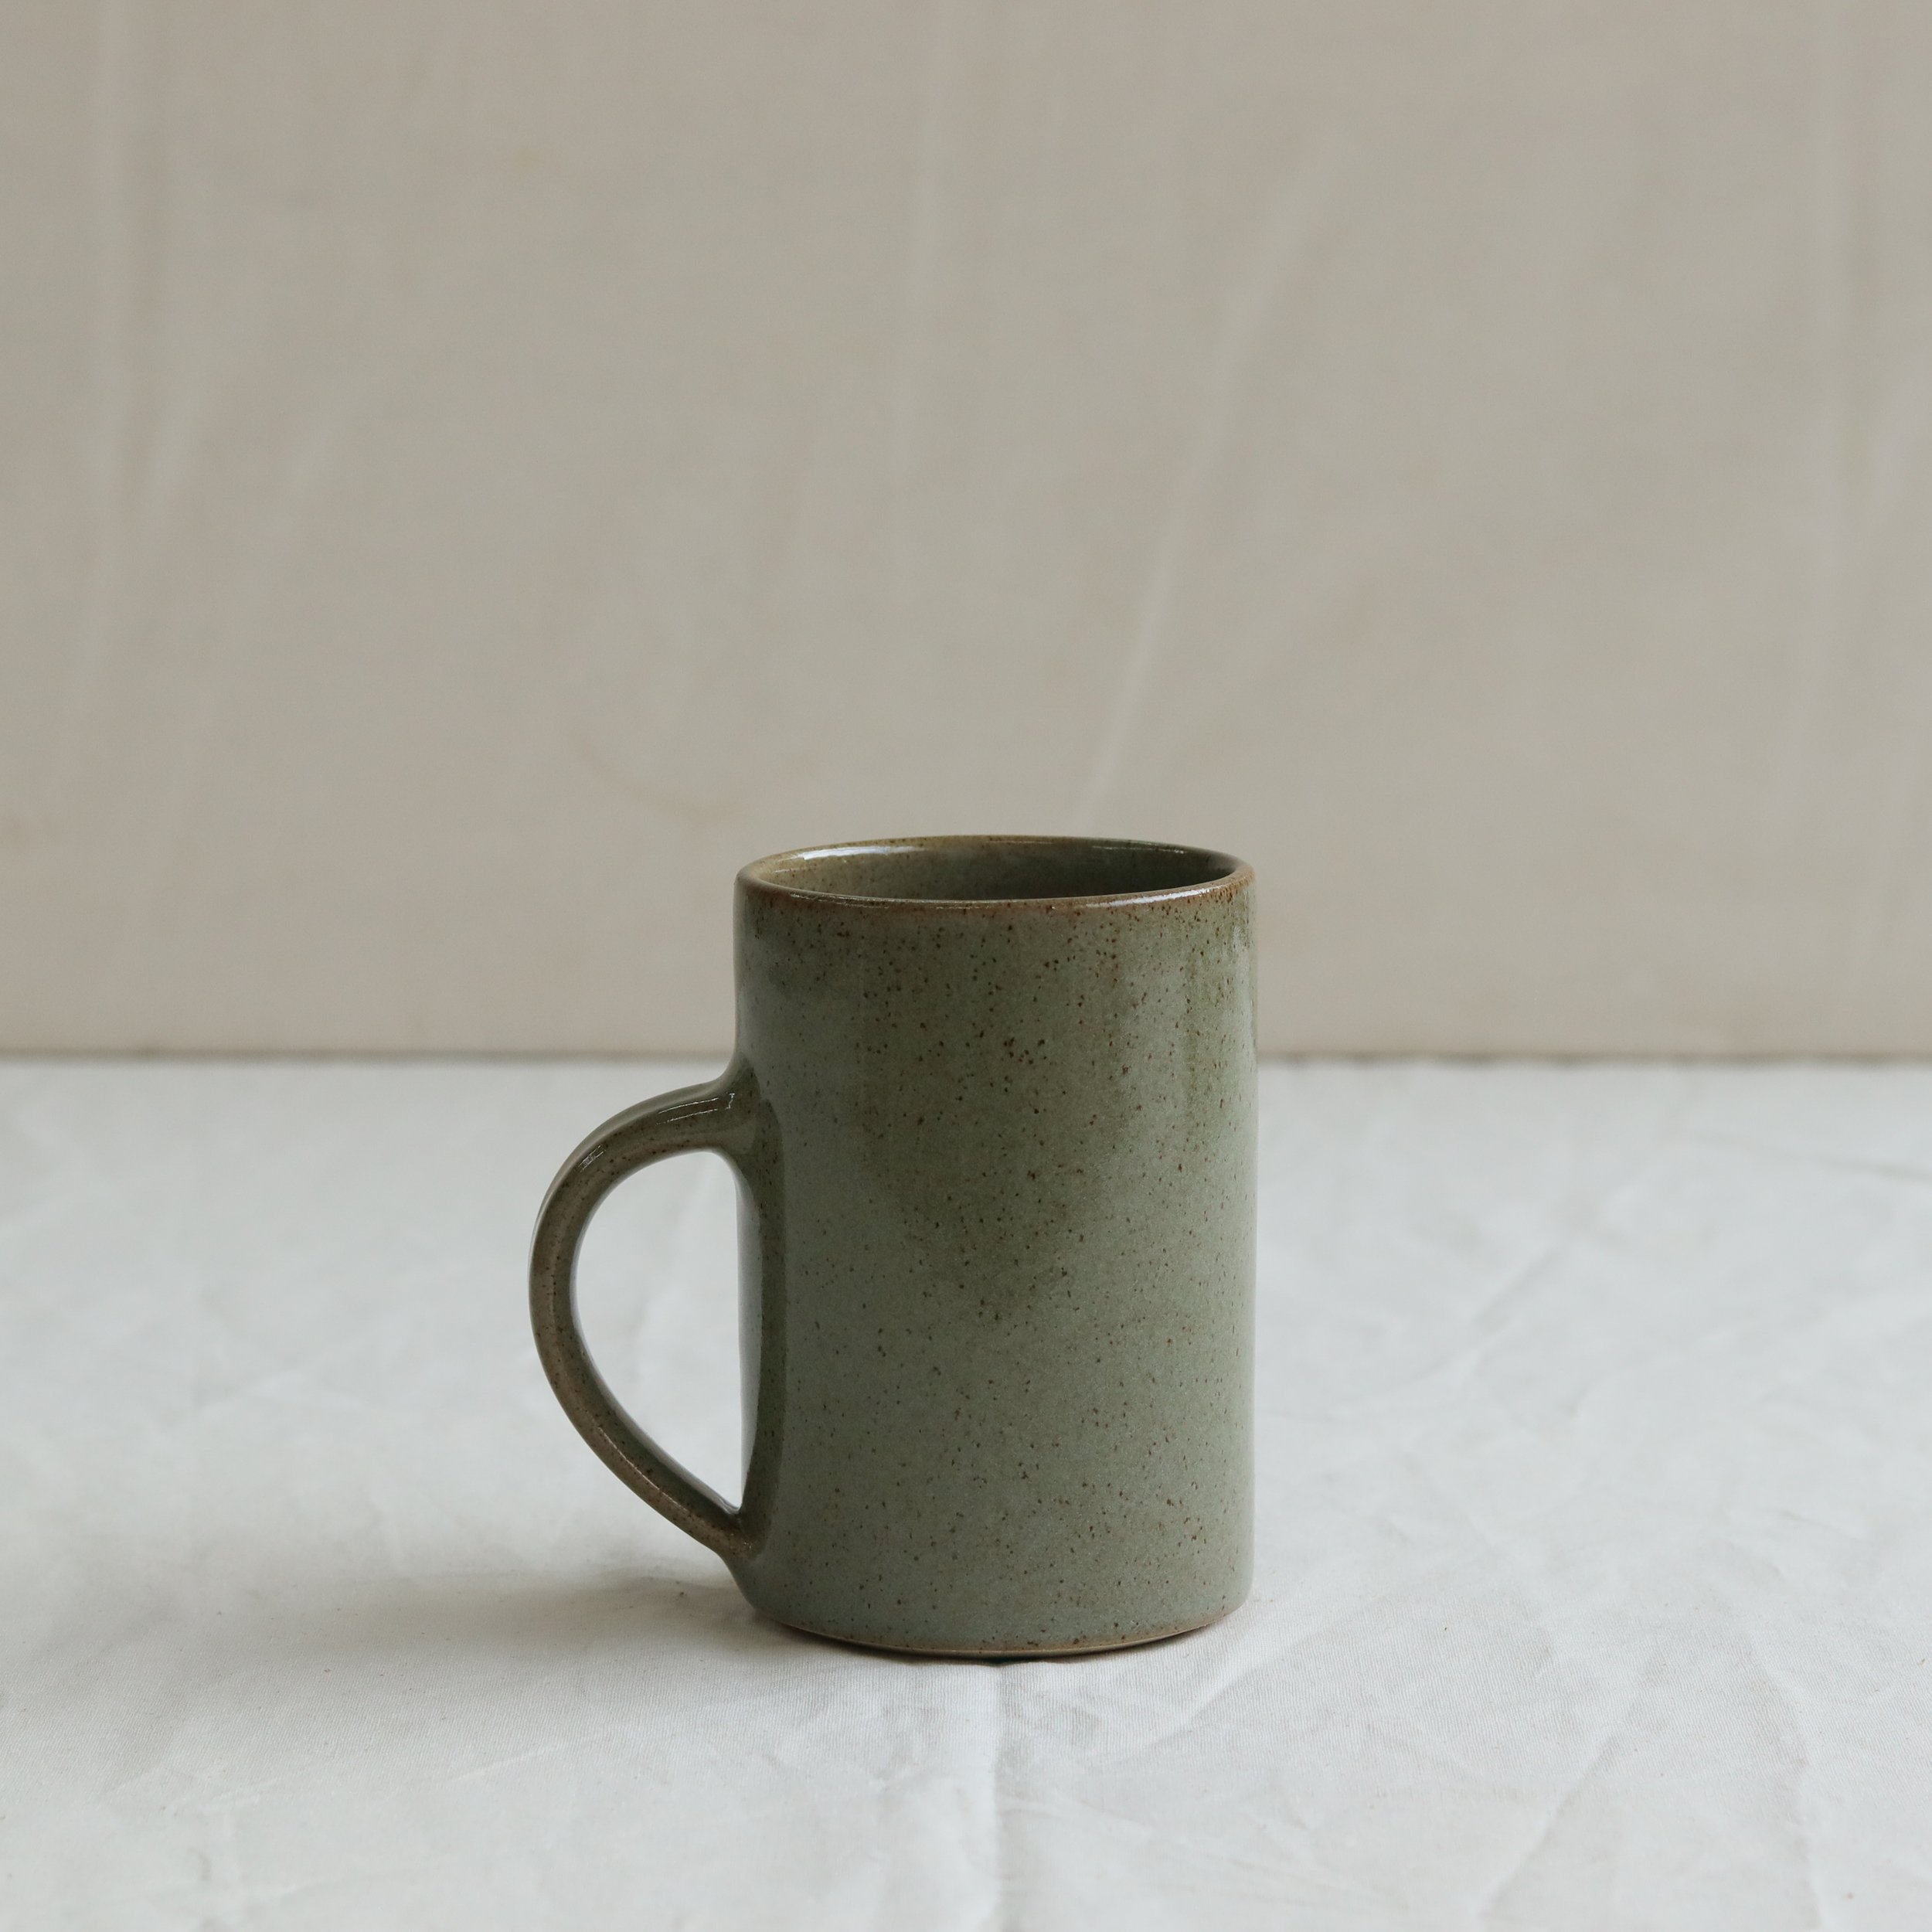 Tall Mug in Olive, Flecked Stoneware-2.jpg